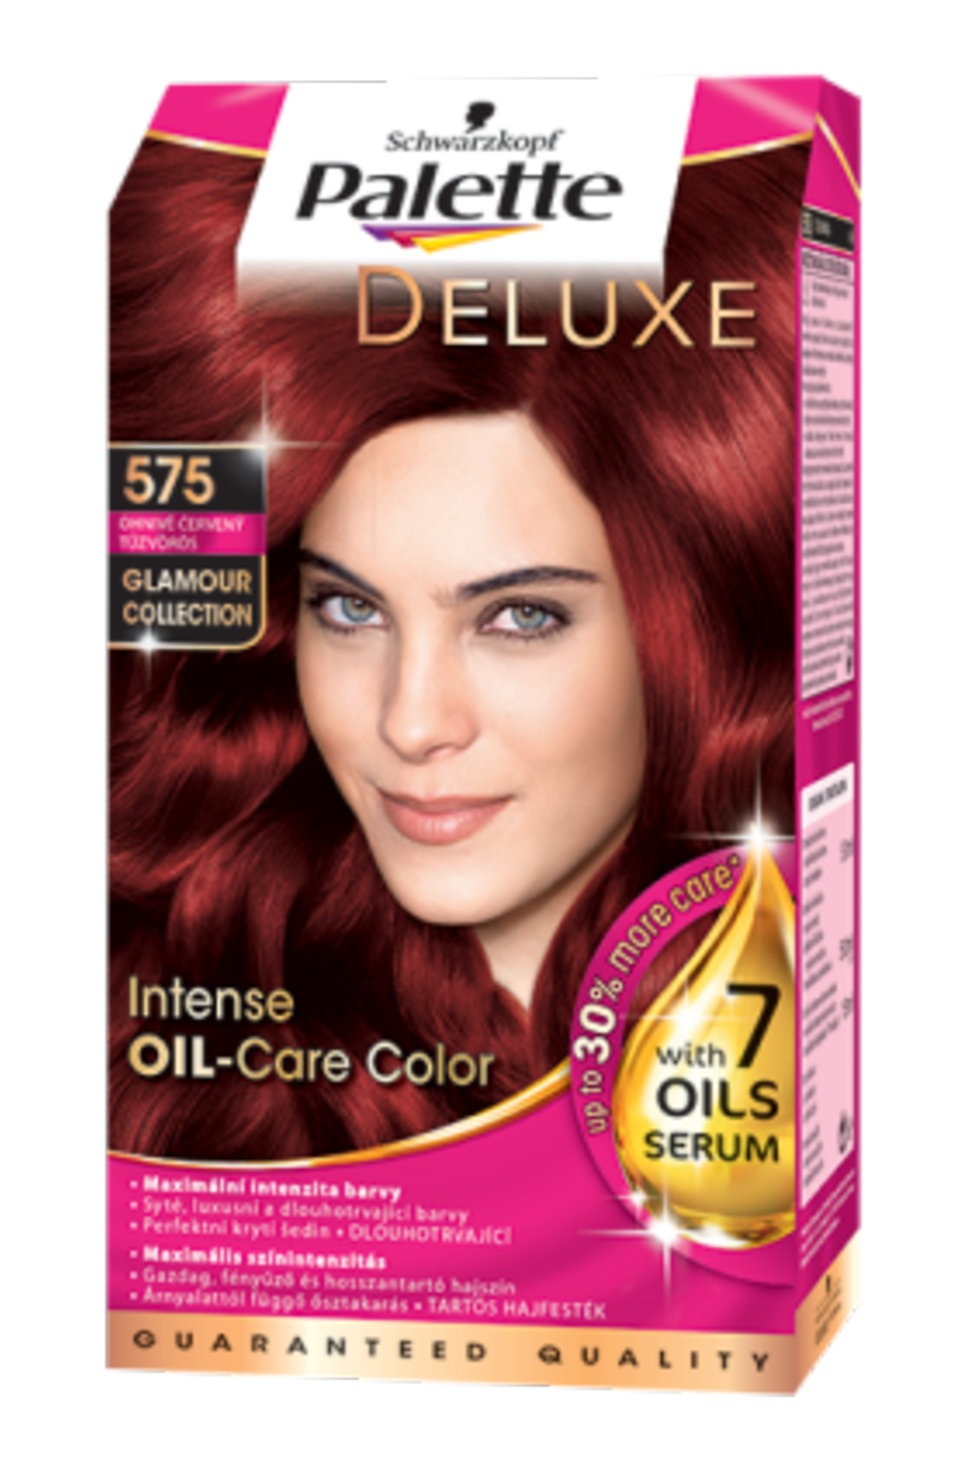 Palette Deluxe Intense OIL-Care Color 575